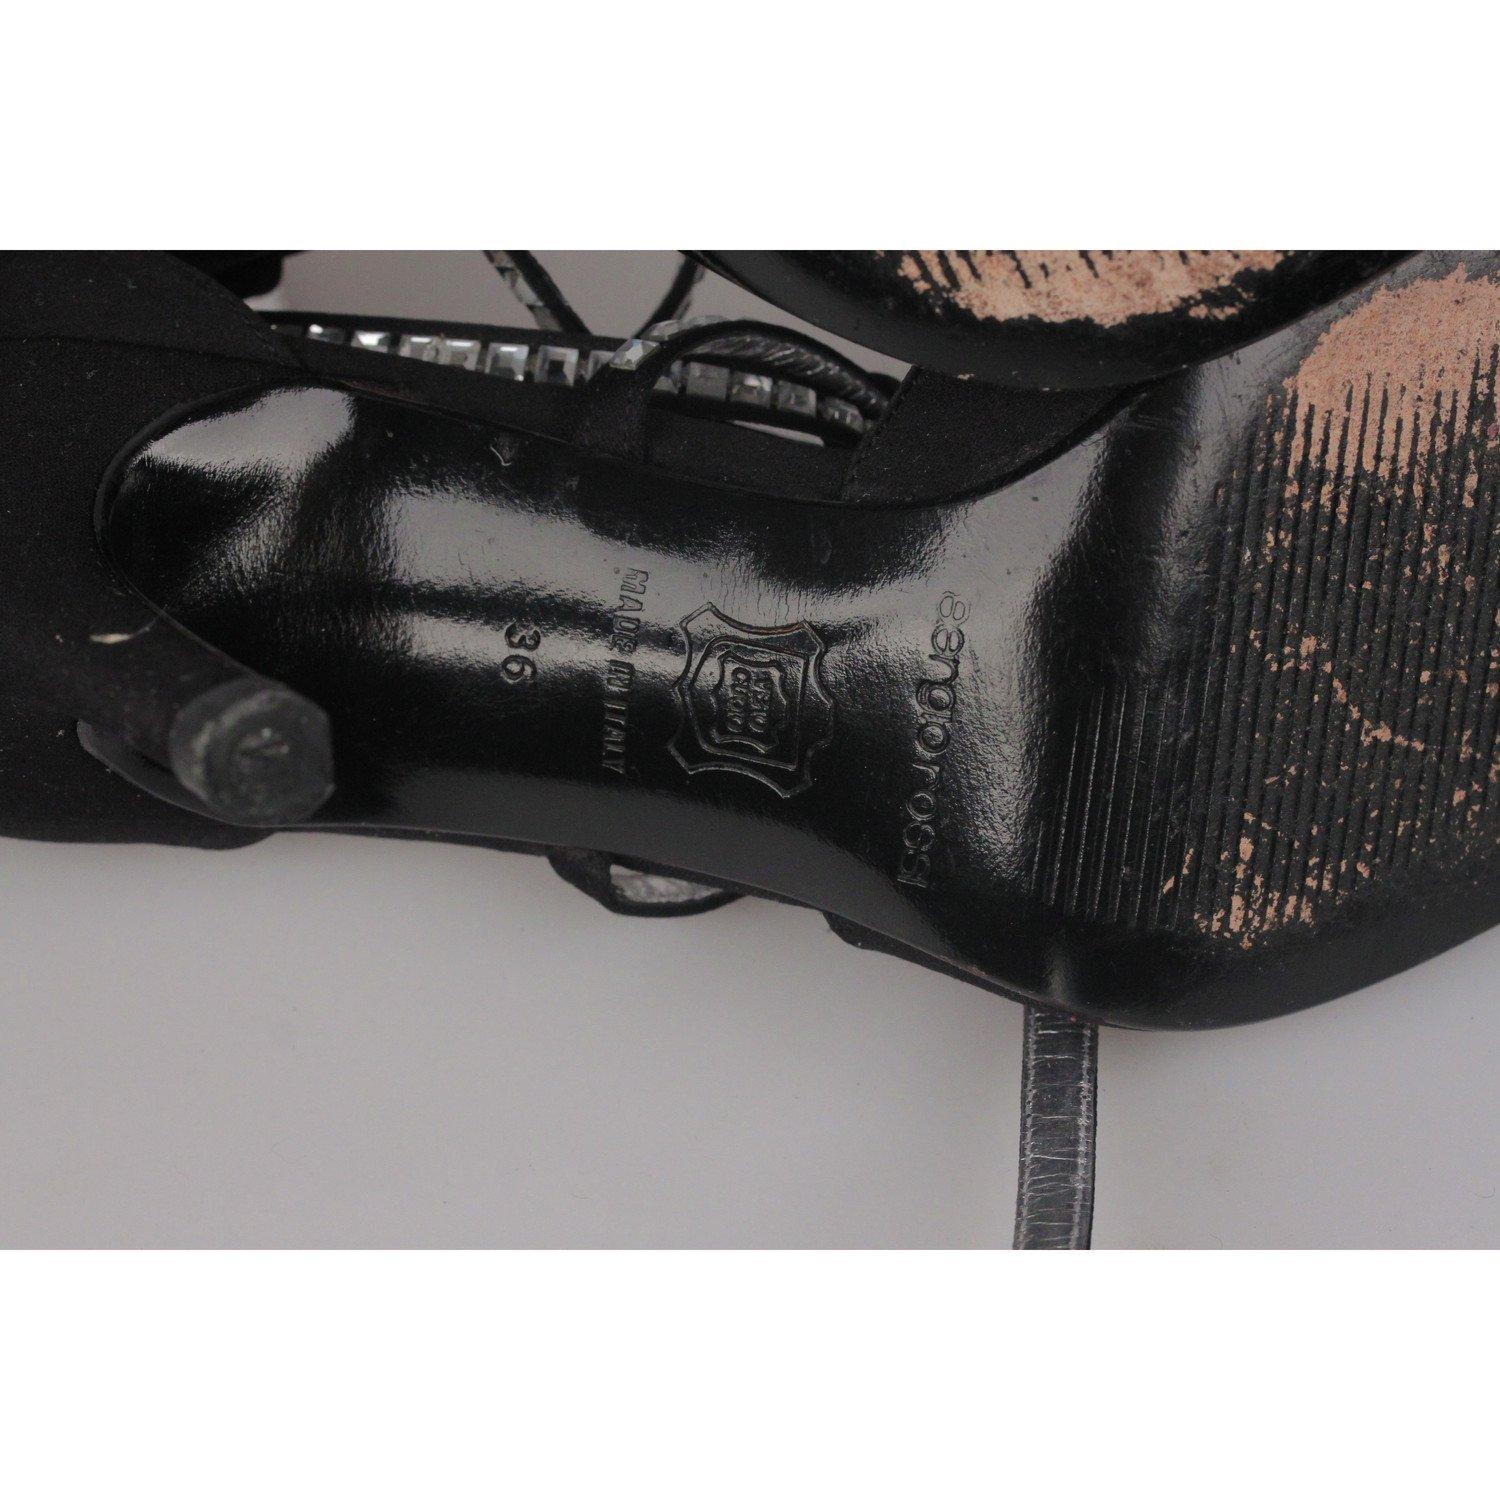 SERGIO ROSSI BlackFabric D'Orsay Shoes HEELS PUMPS with Crystals 36 IT 2